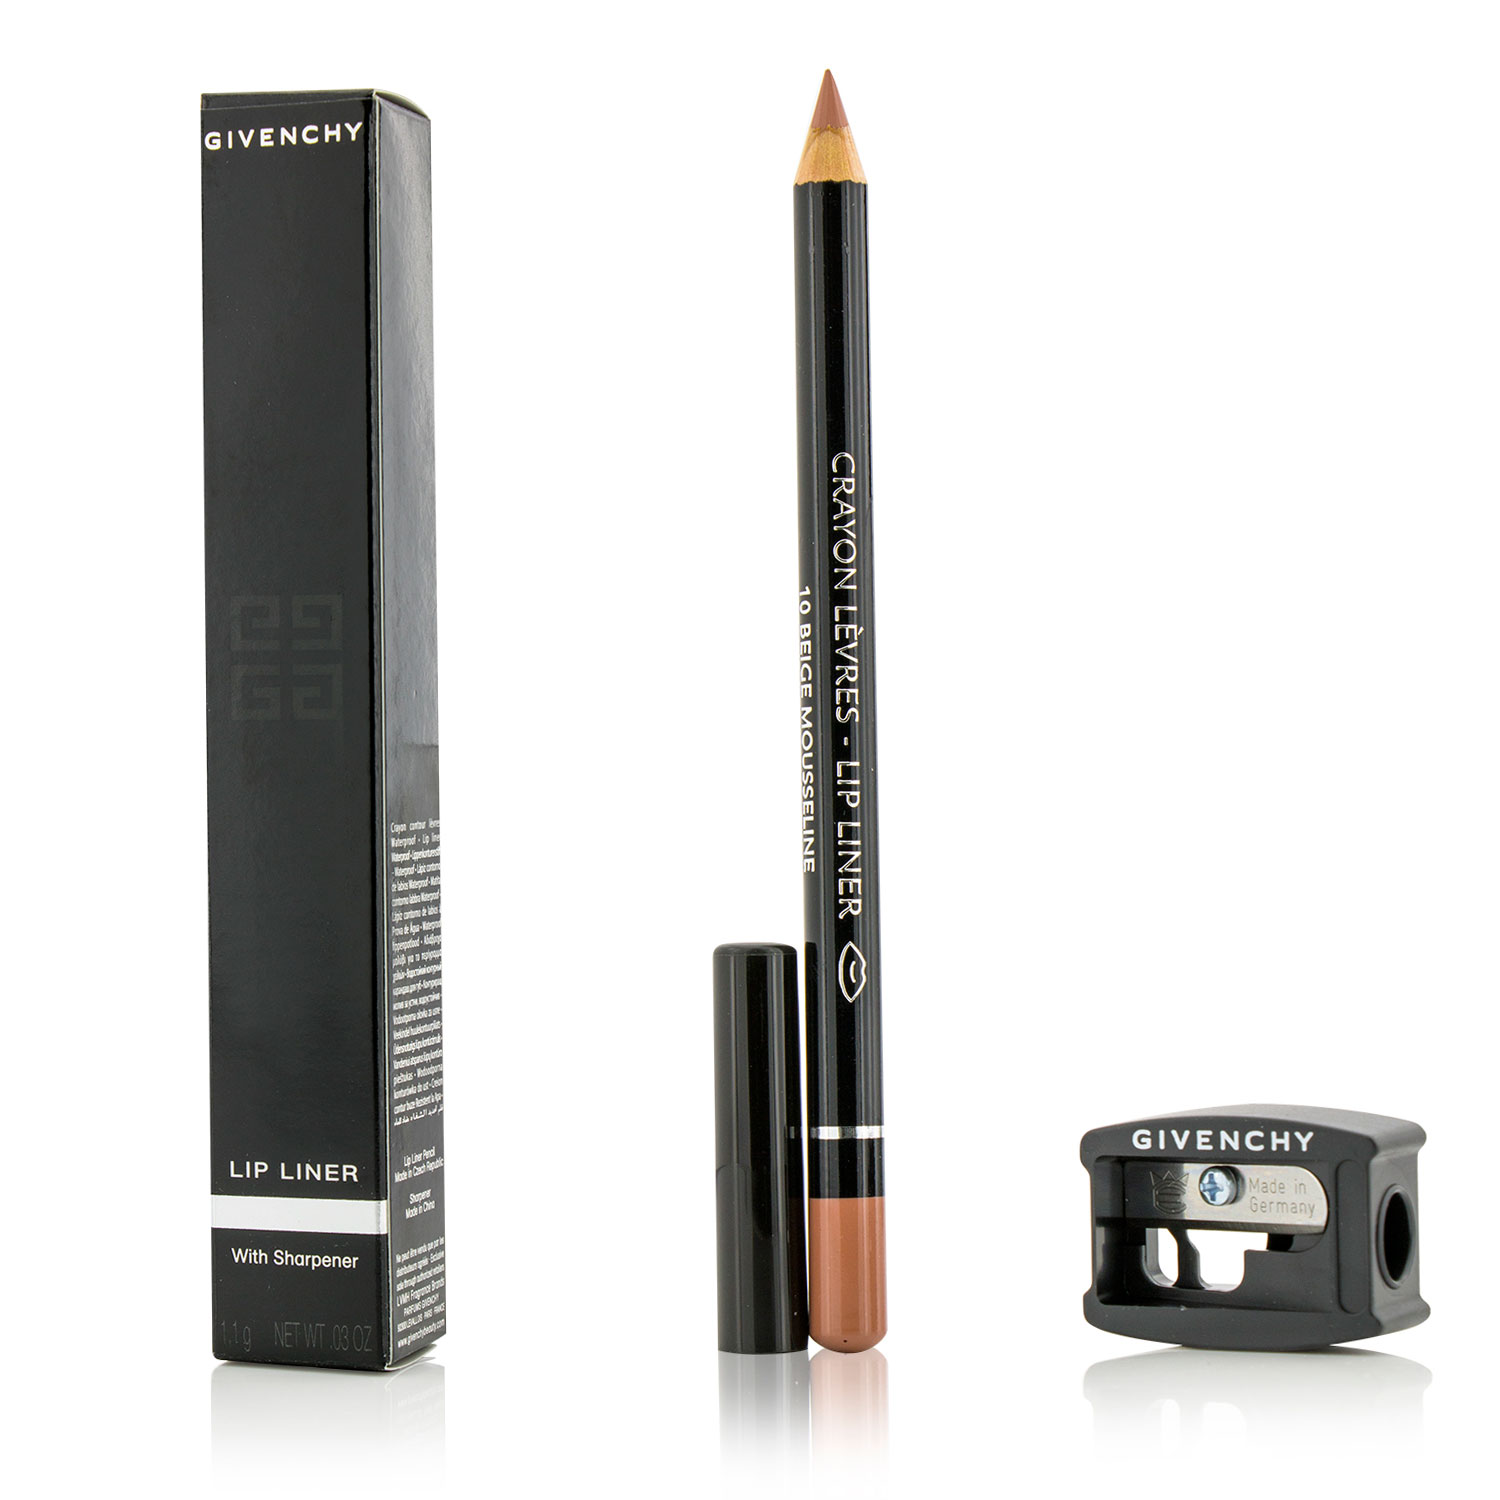 Lip Liner (With Sharpener) - # 10 Beige Mousseline Givenchy Image